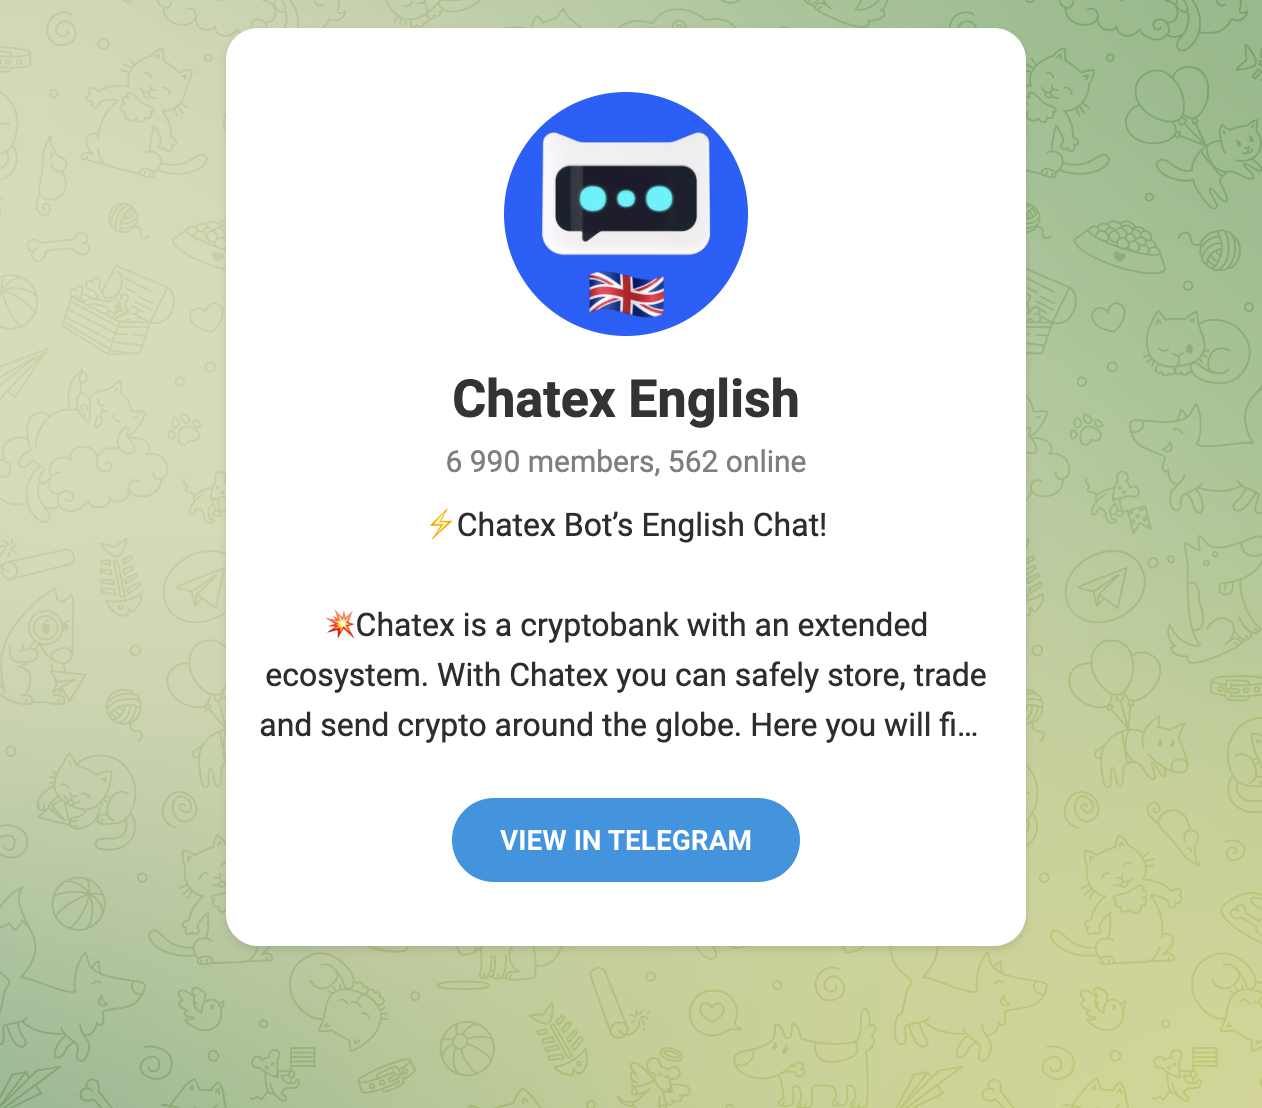 Chatex Bot's English Chat